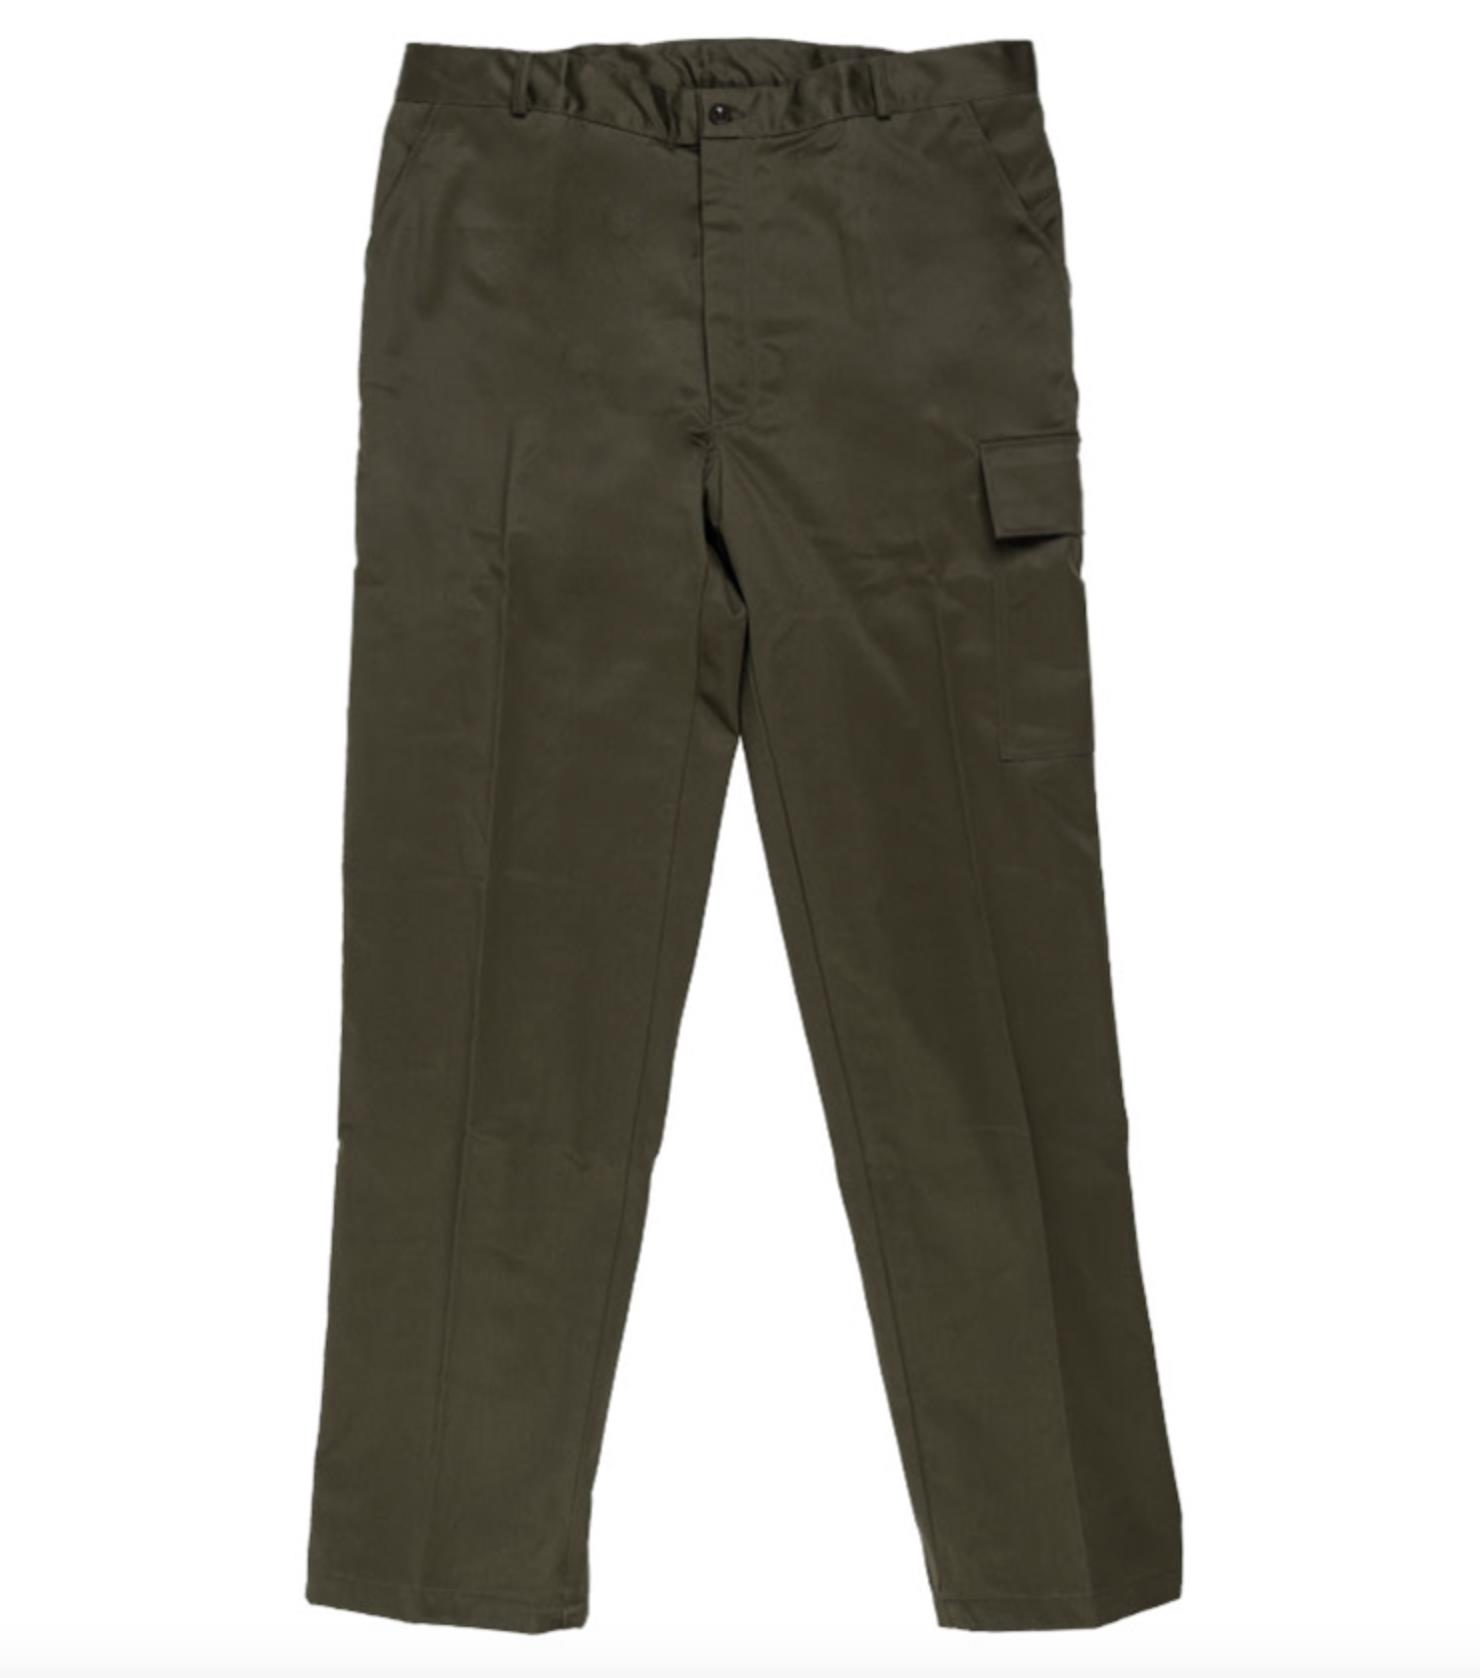 Genuine Belgian Army Surplus Field Uniform Trousers Pants Seyntex ...